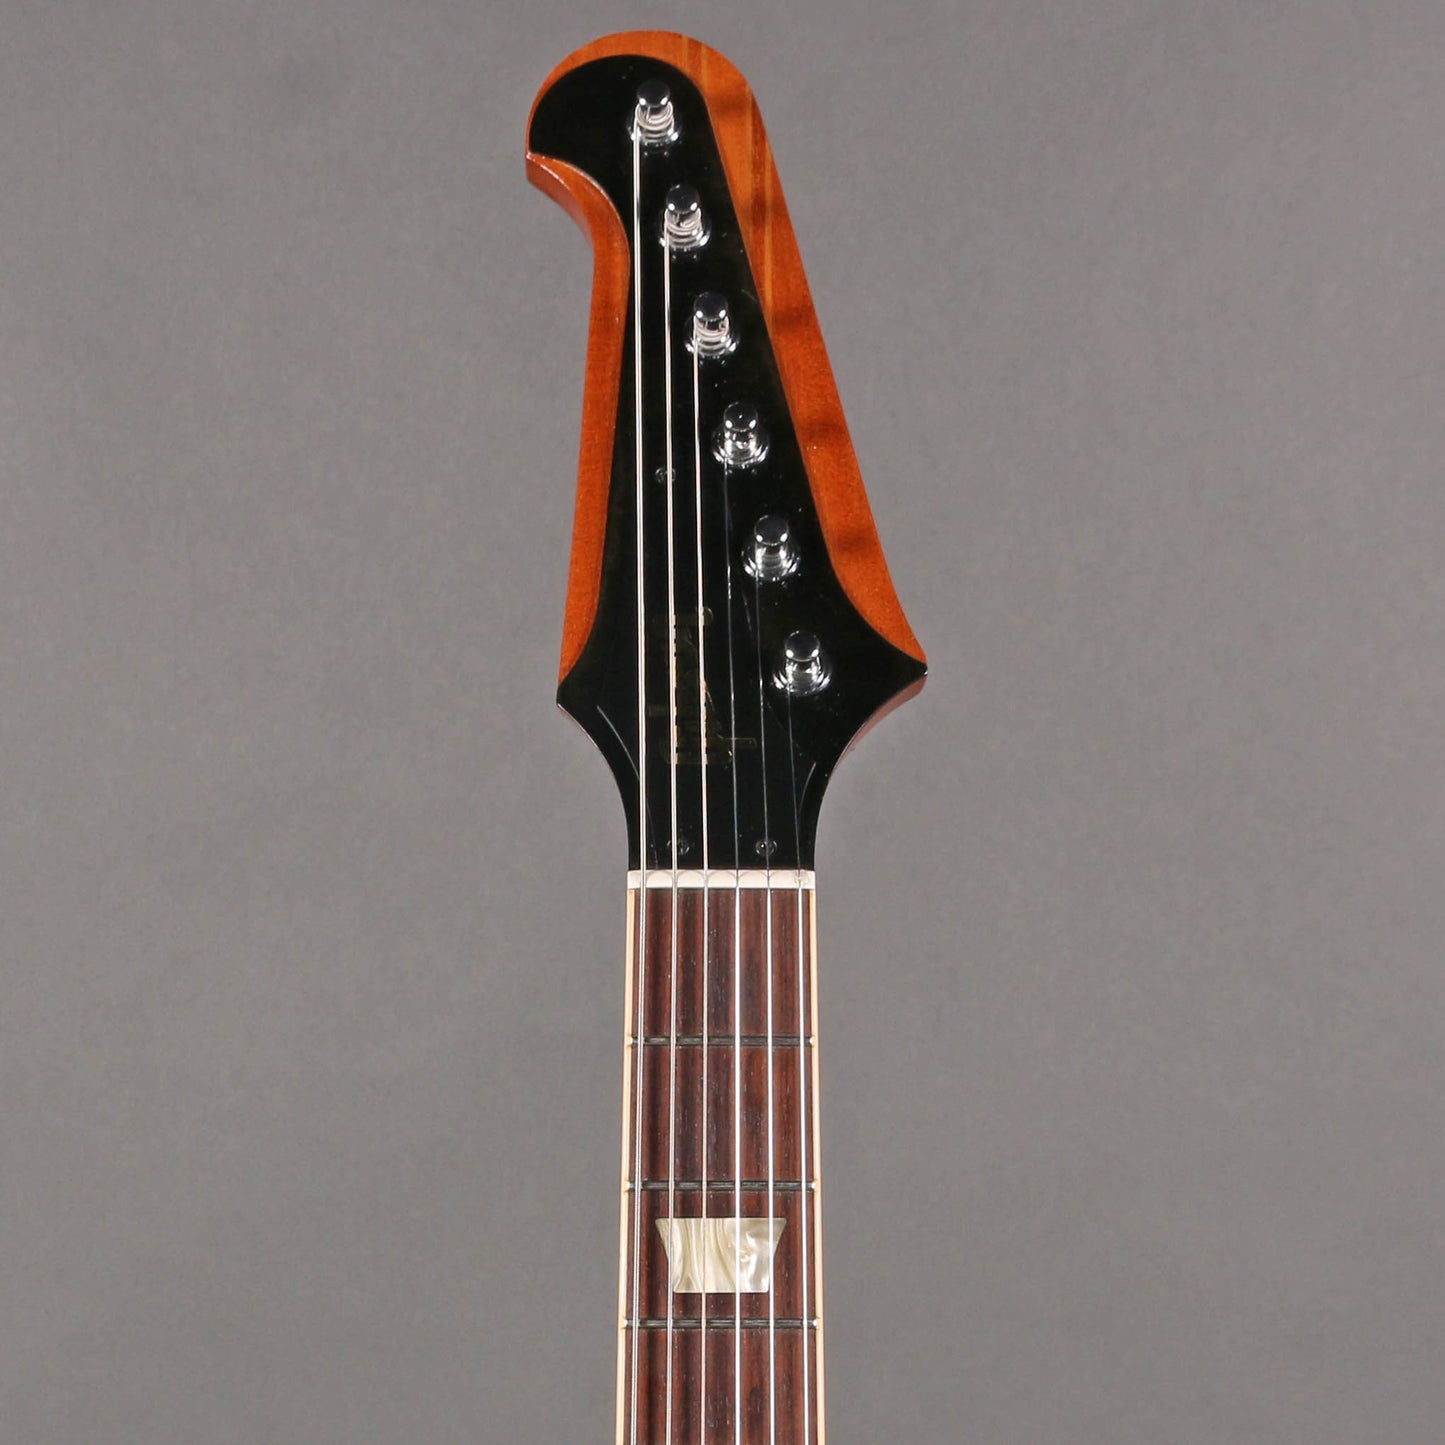 2006 Gibson Firebird V